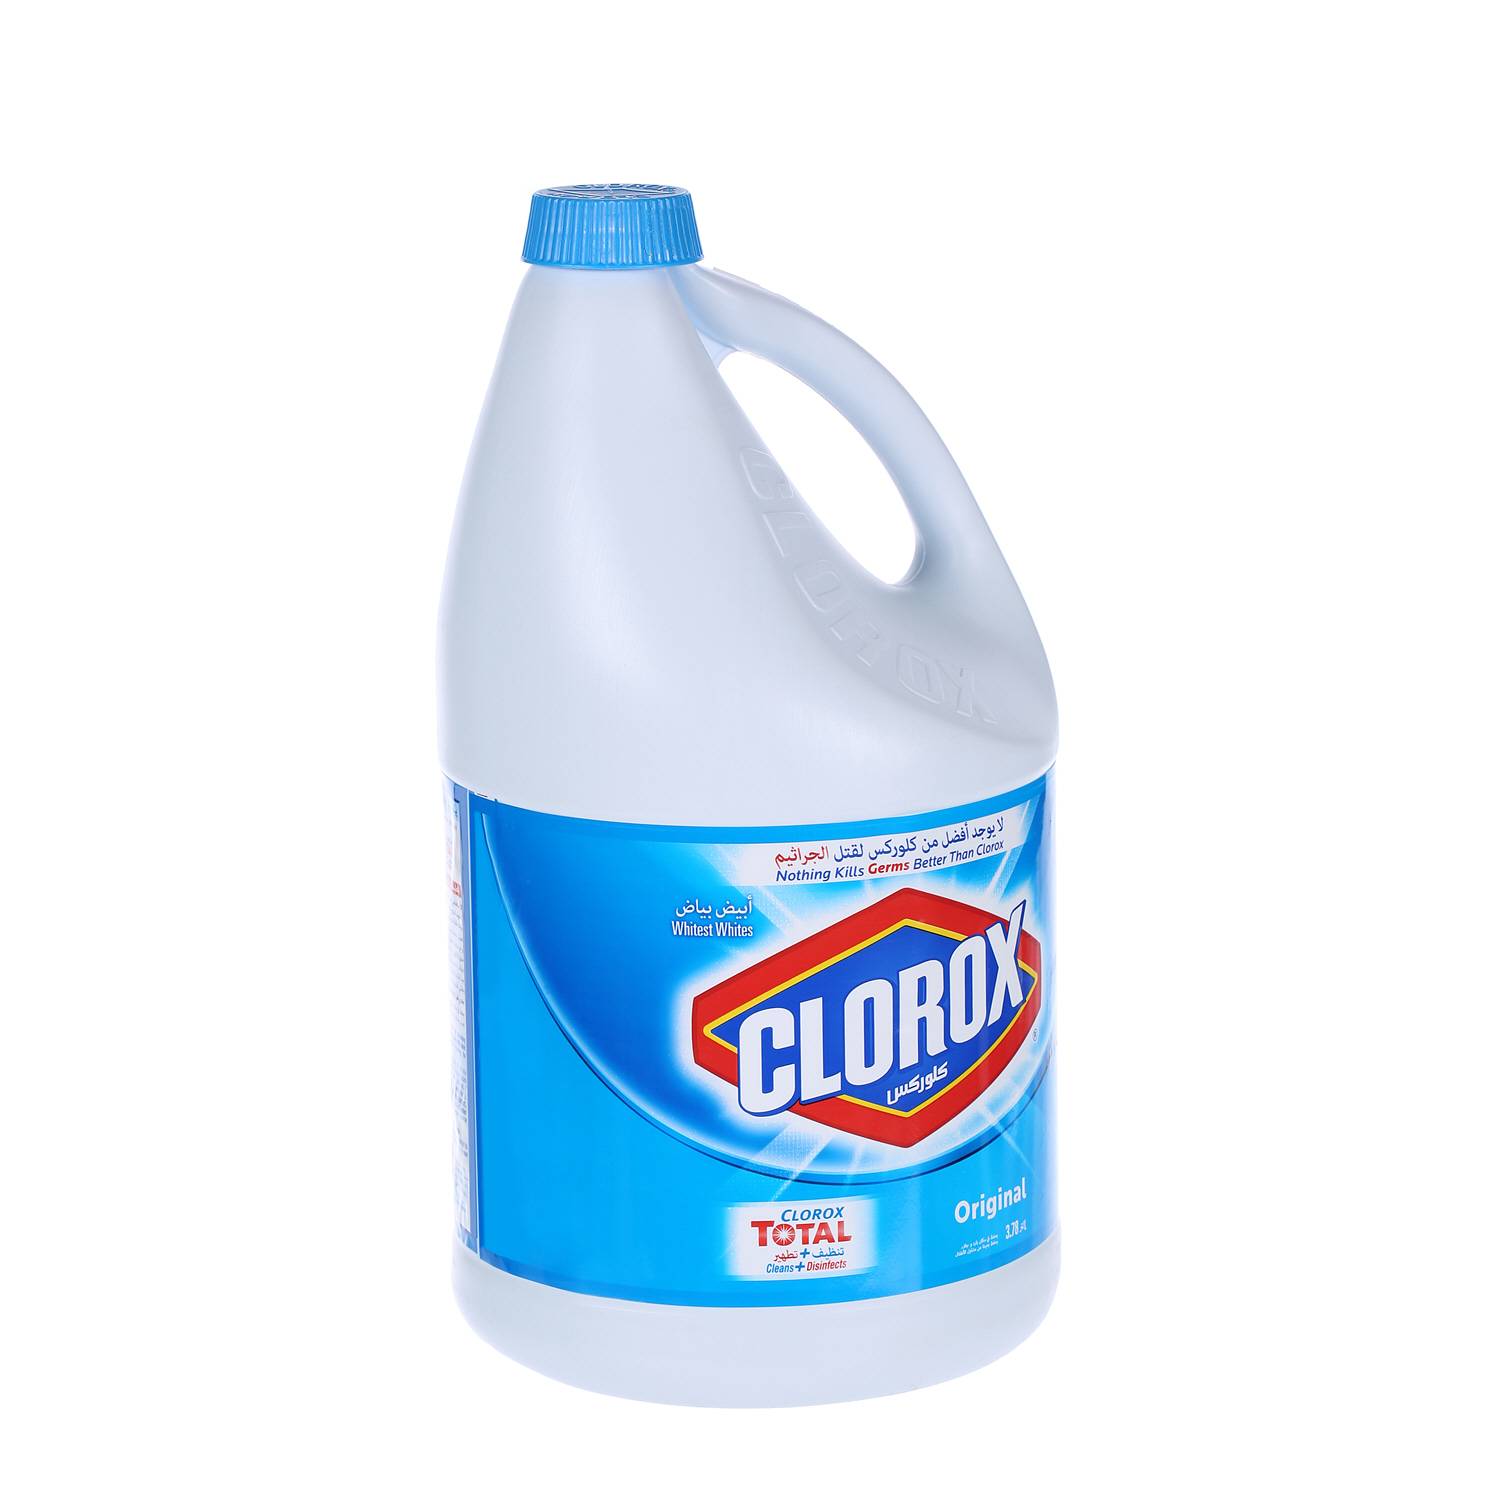 Clorox Bleach Regular 1 Gallon